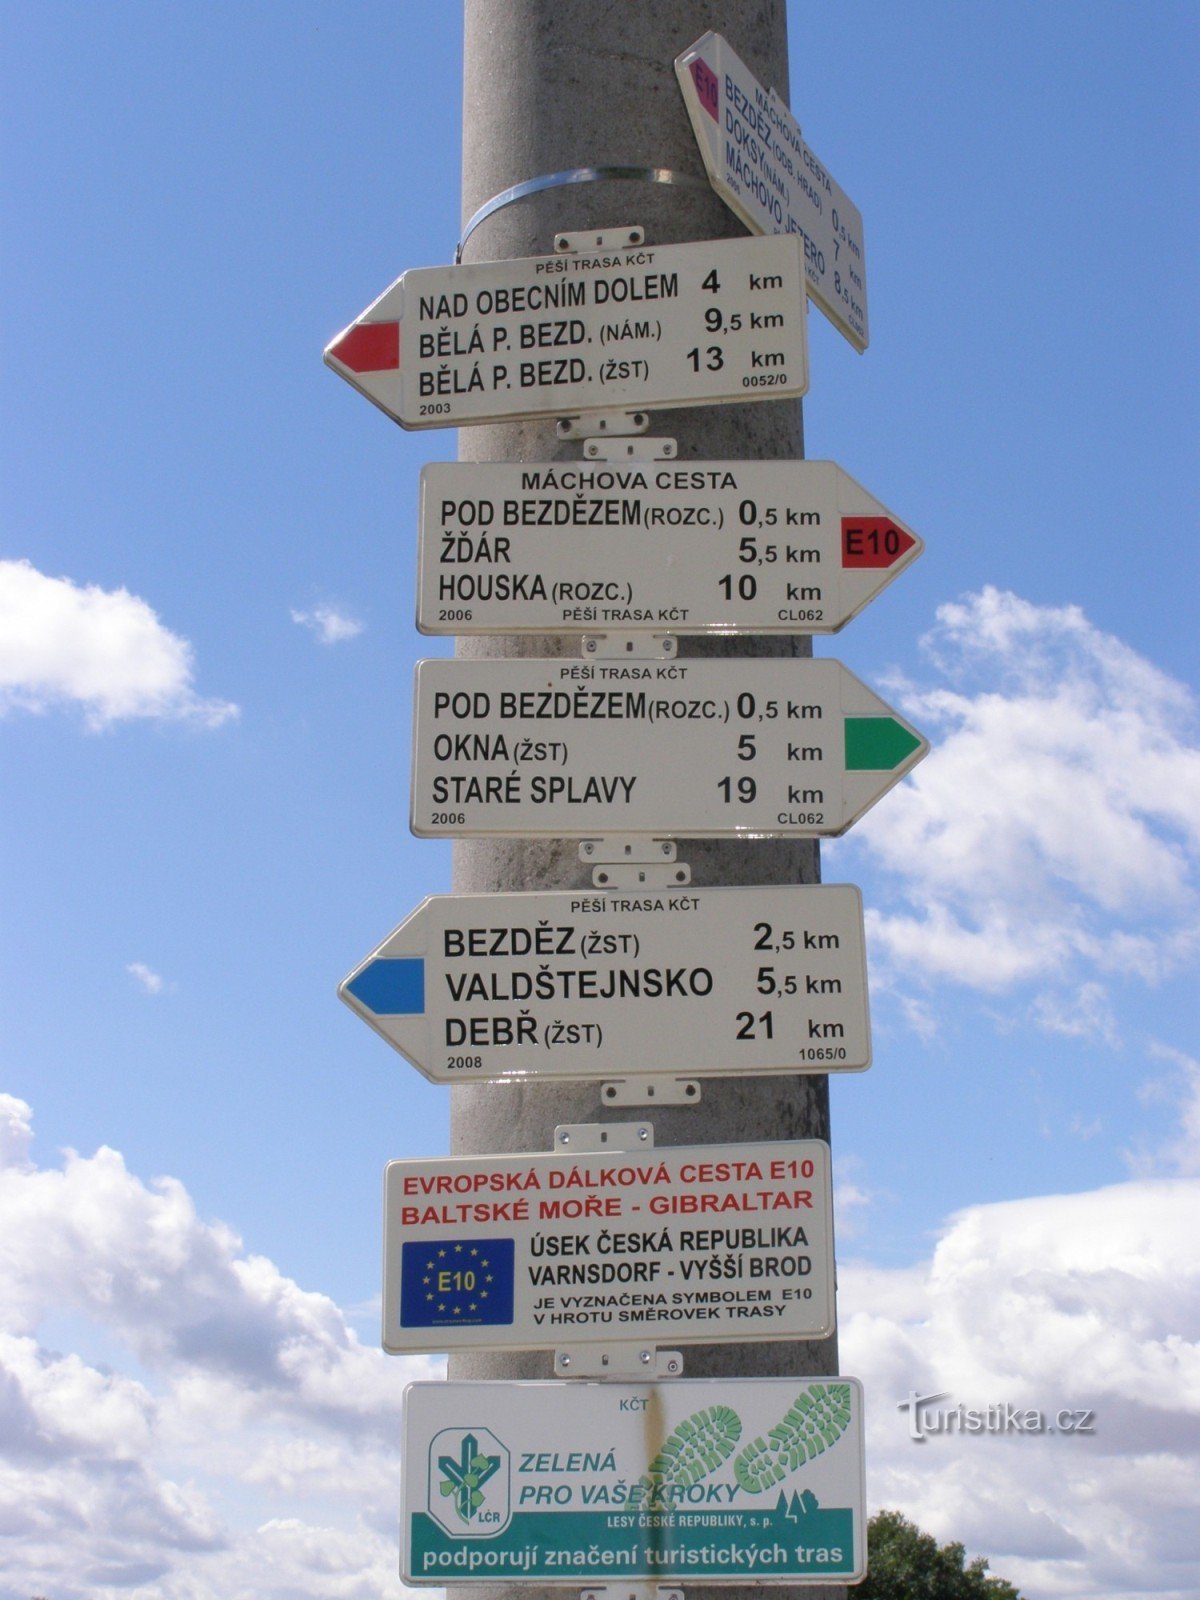 toeristisch kruispunt Bezděz - dorp